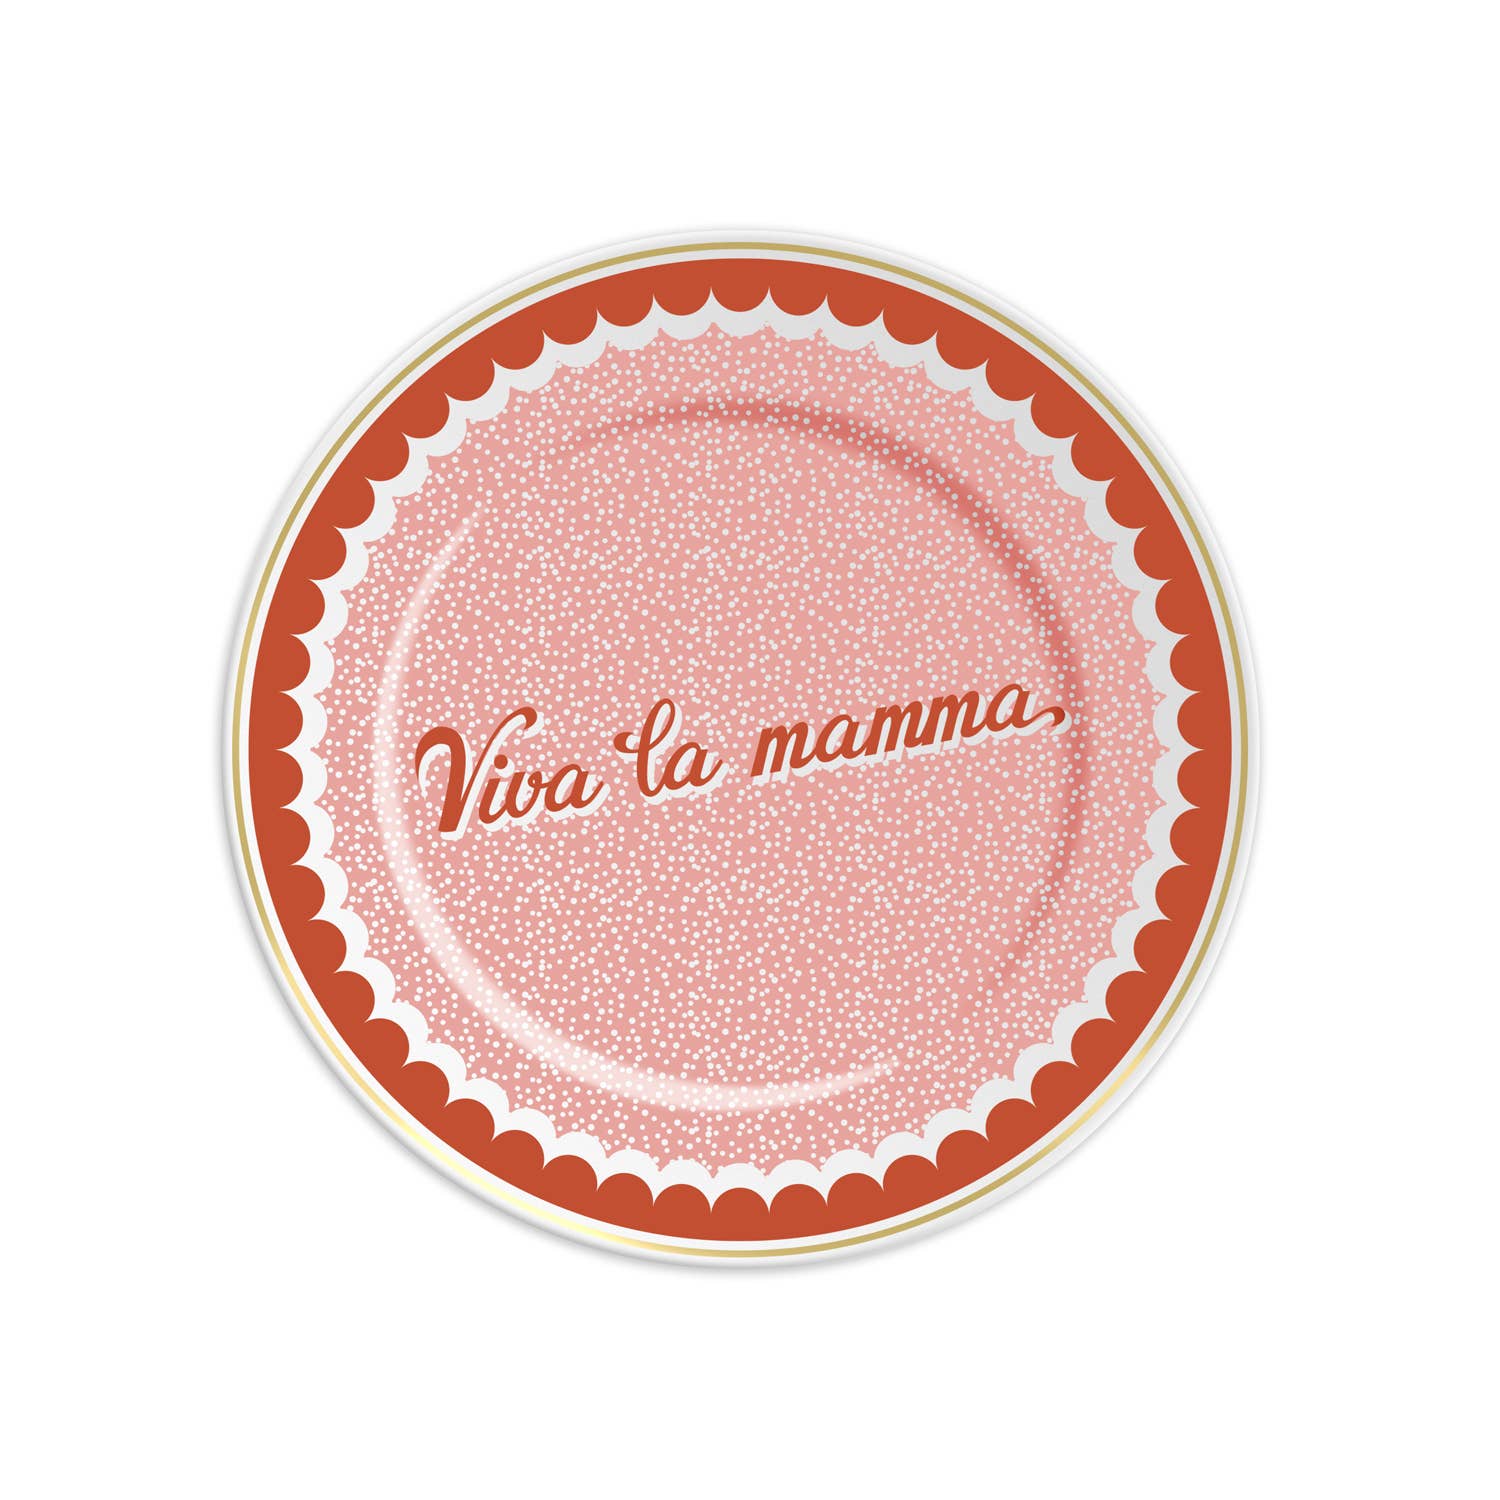 VIVA LA MAMMA Long Live The Mother Plate